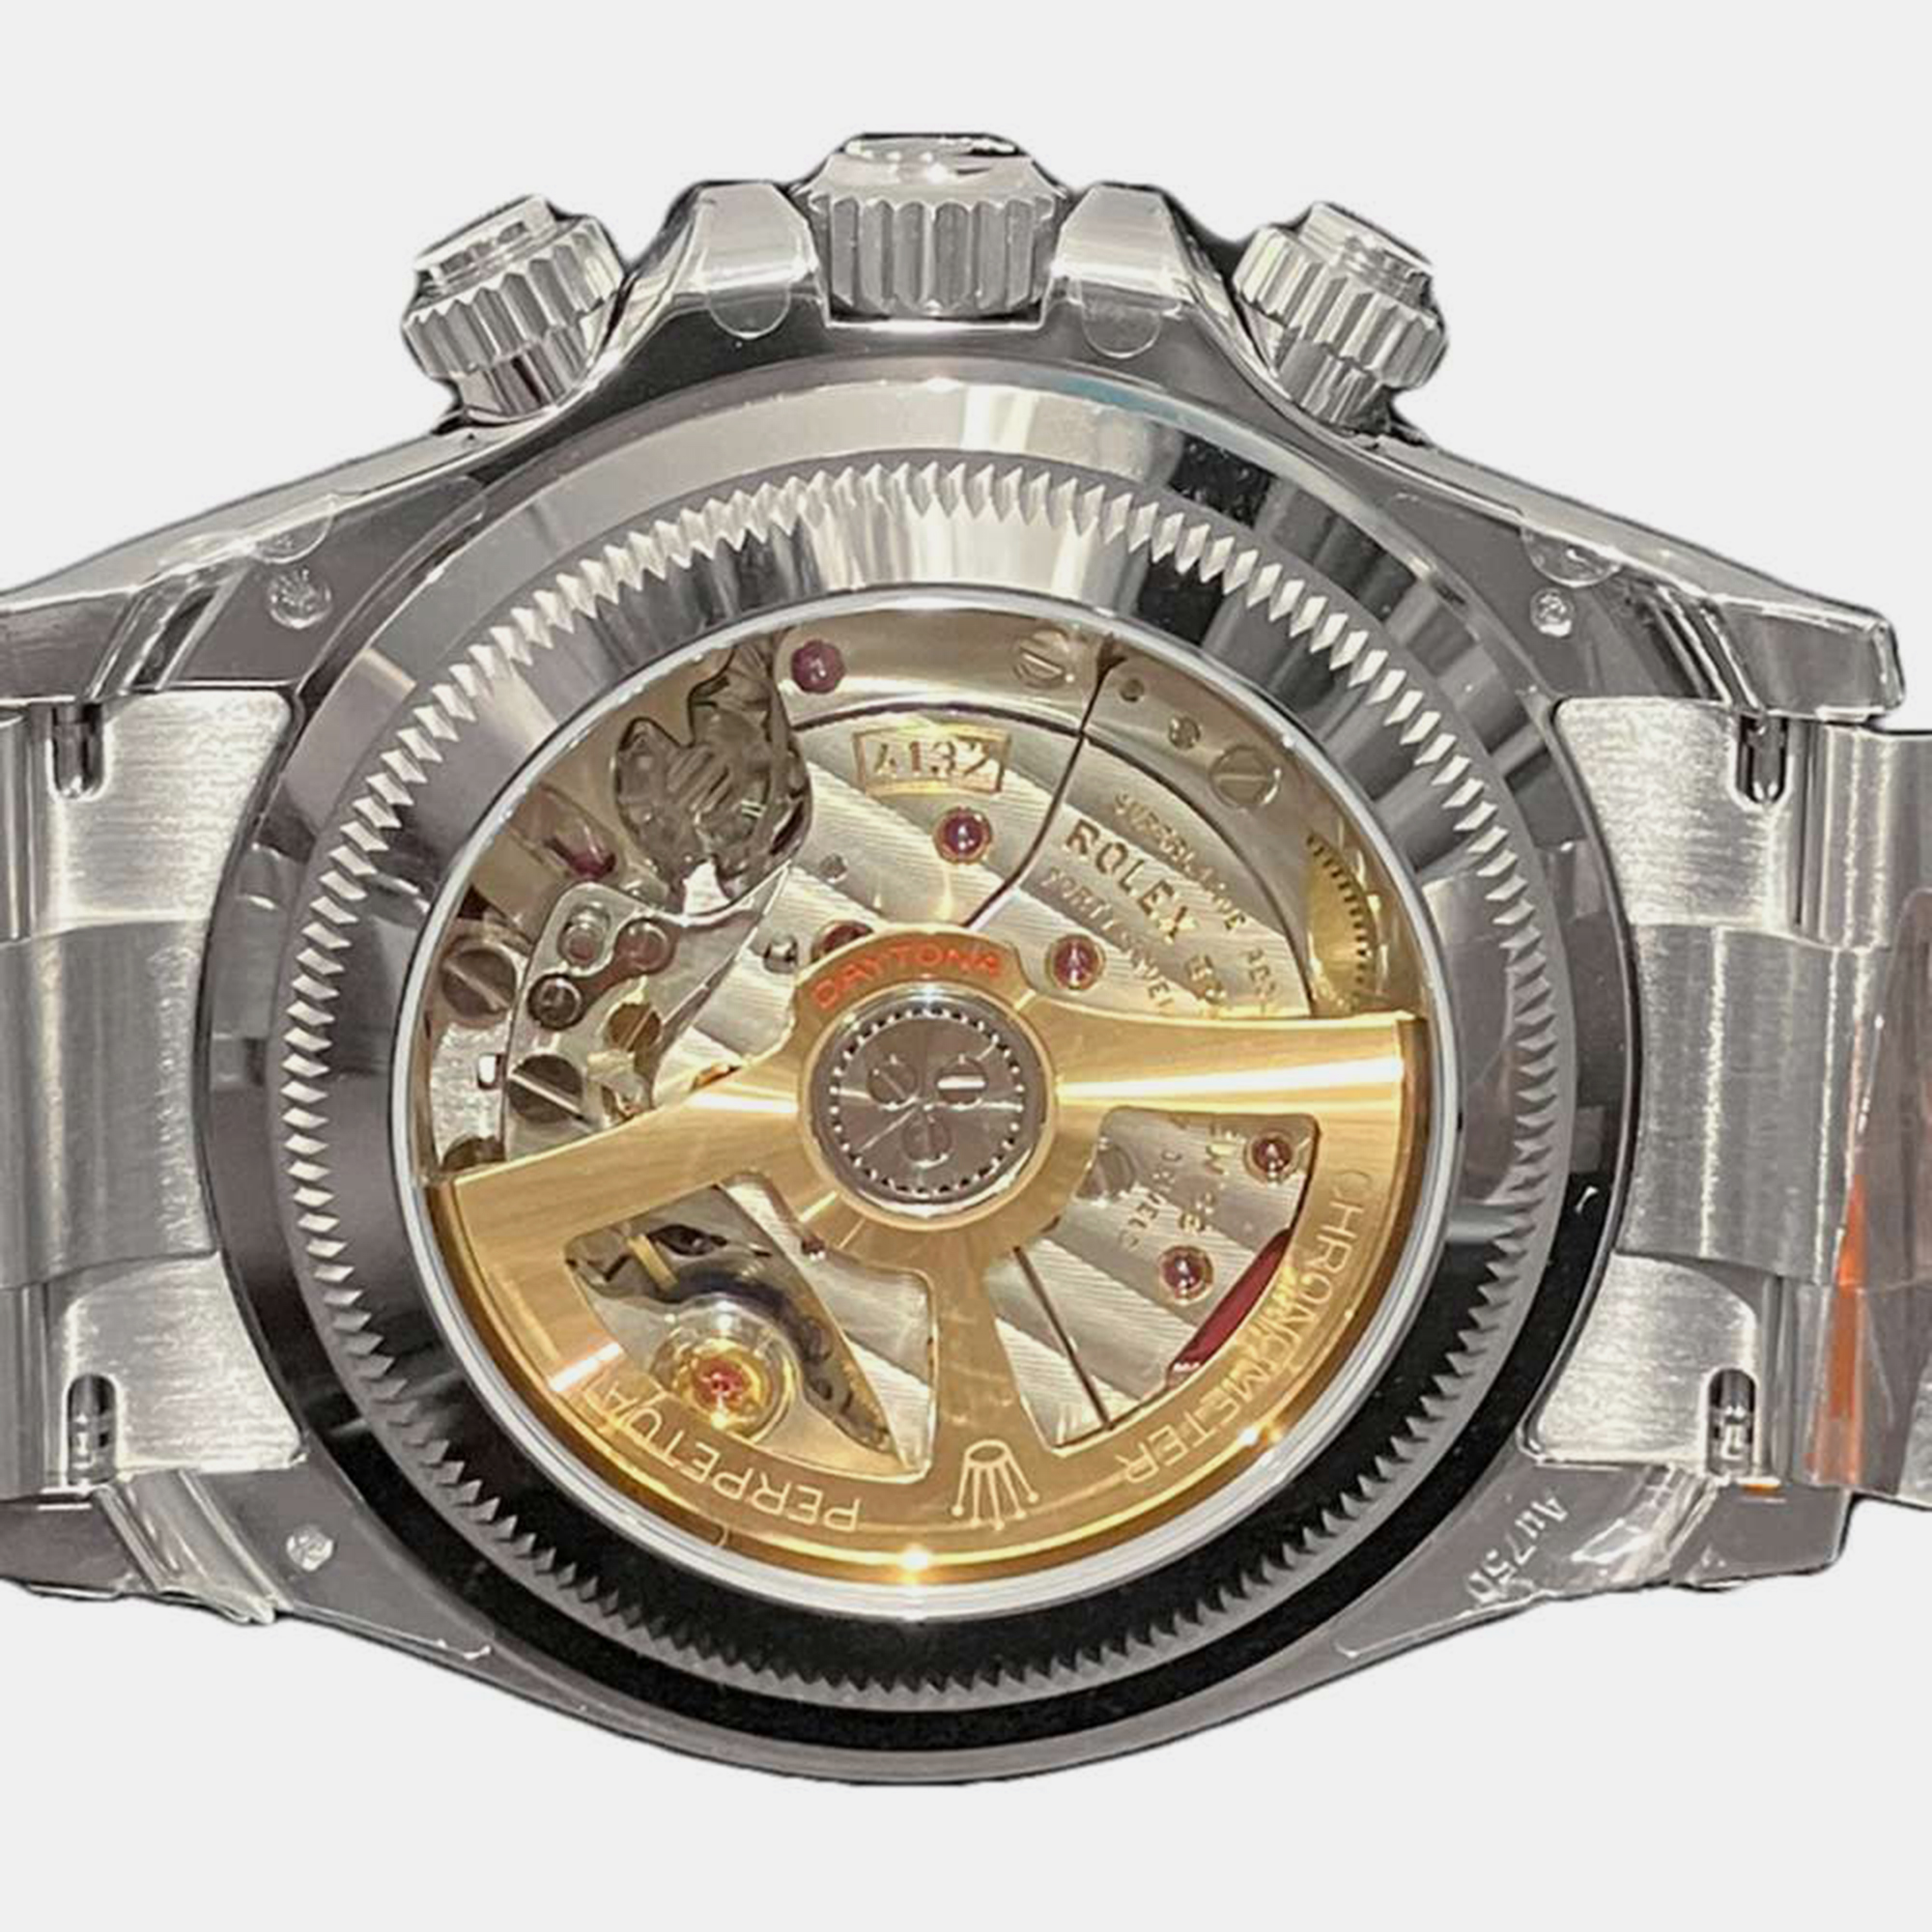 Rolex Black 18k White Gold Cosmograph Daytona 126529LN Automatic Men's Wristwatch 40 Mm